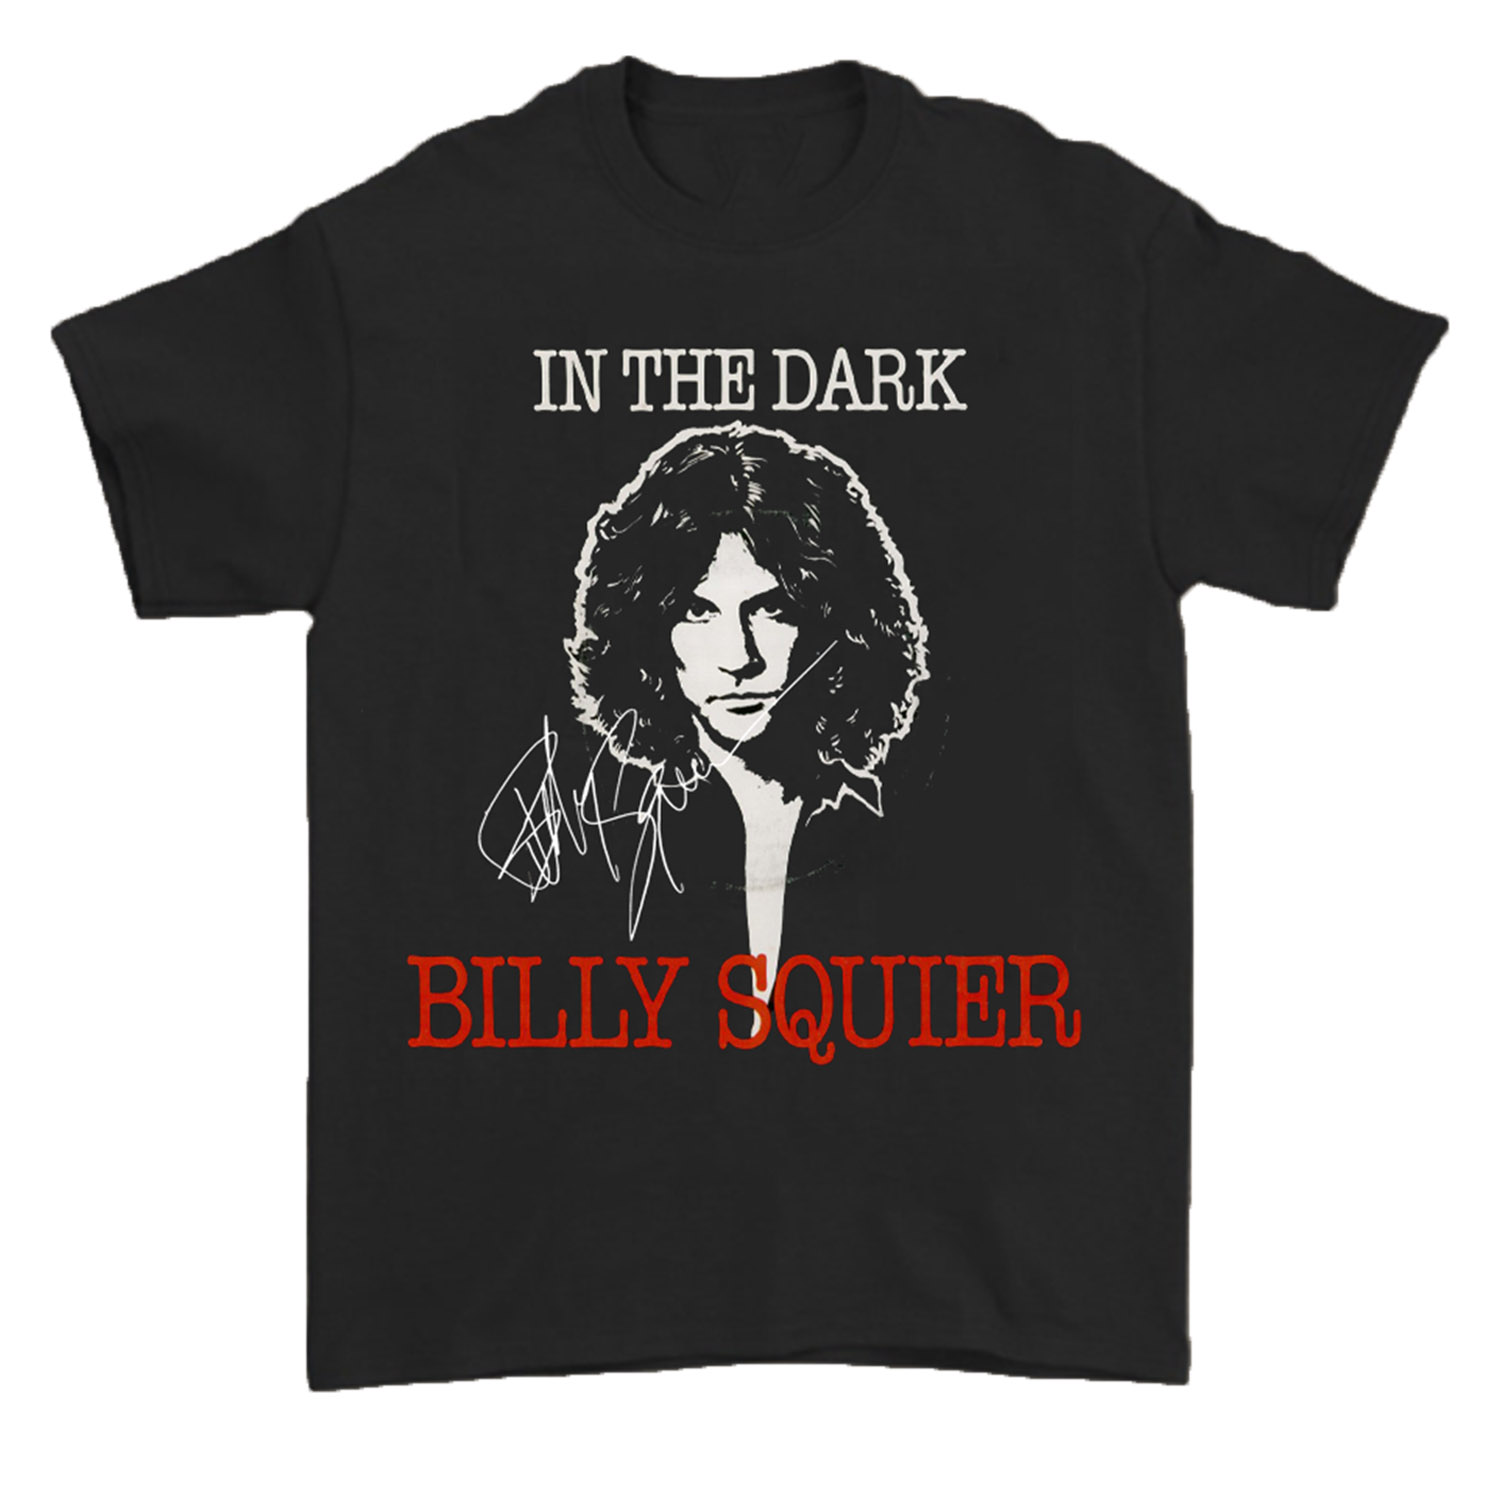 Cothing T-Shirt Billy in The Dark Music S%q.u.i.e.r# Customize Shirt for Kids, Men, Women, Unisex